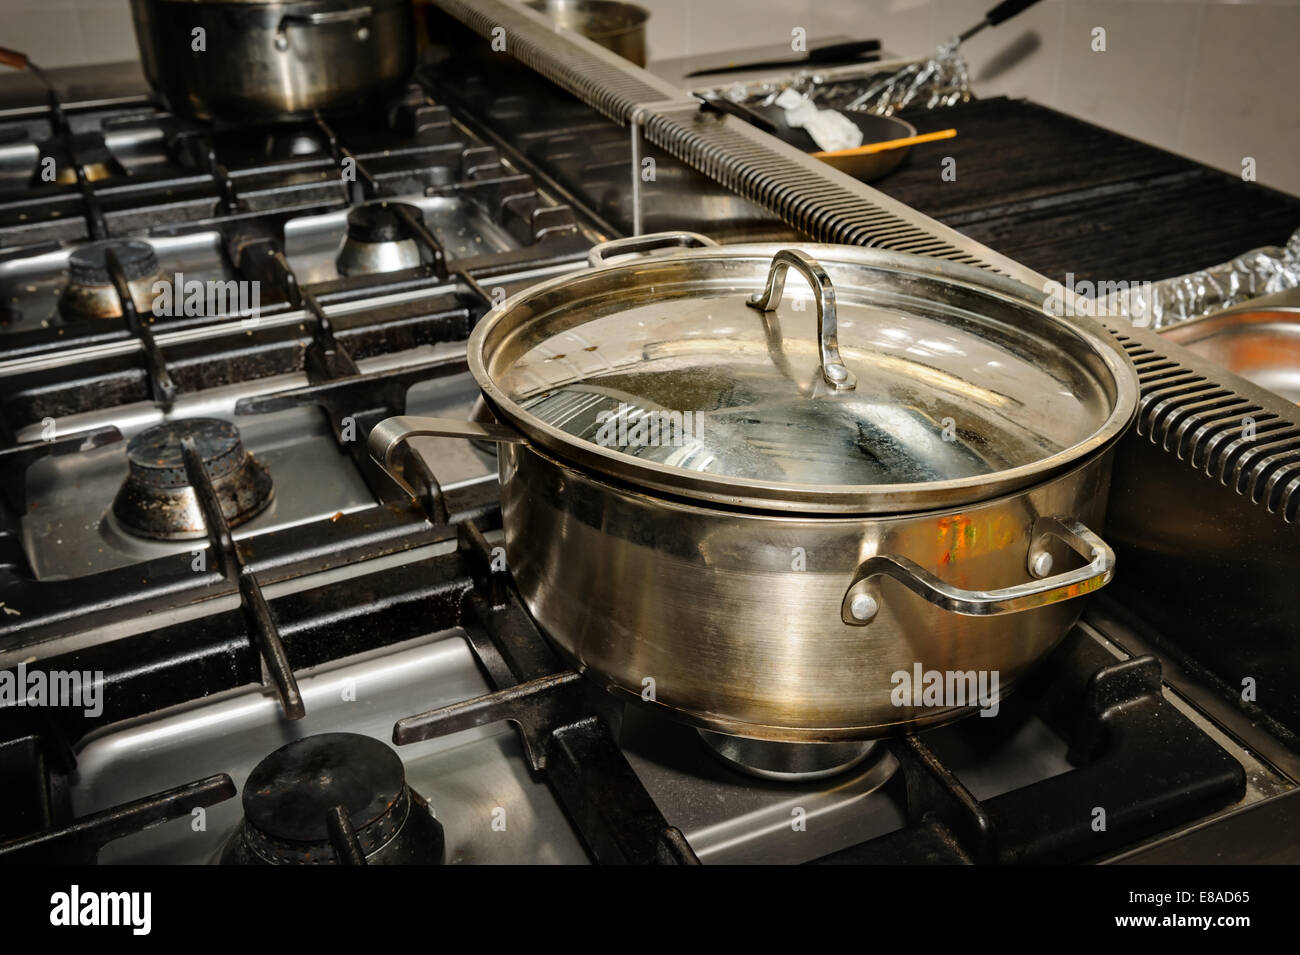 real restaurant kitchen Stock Photo - Alamy